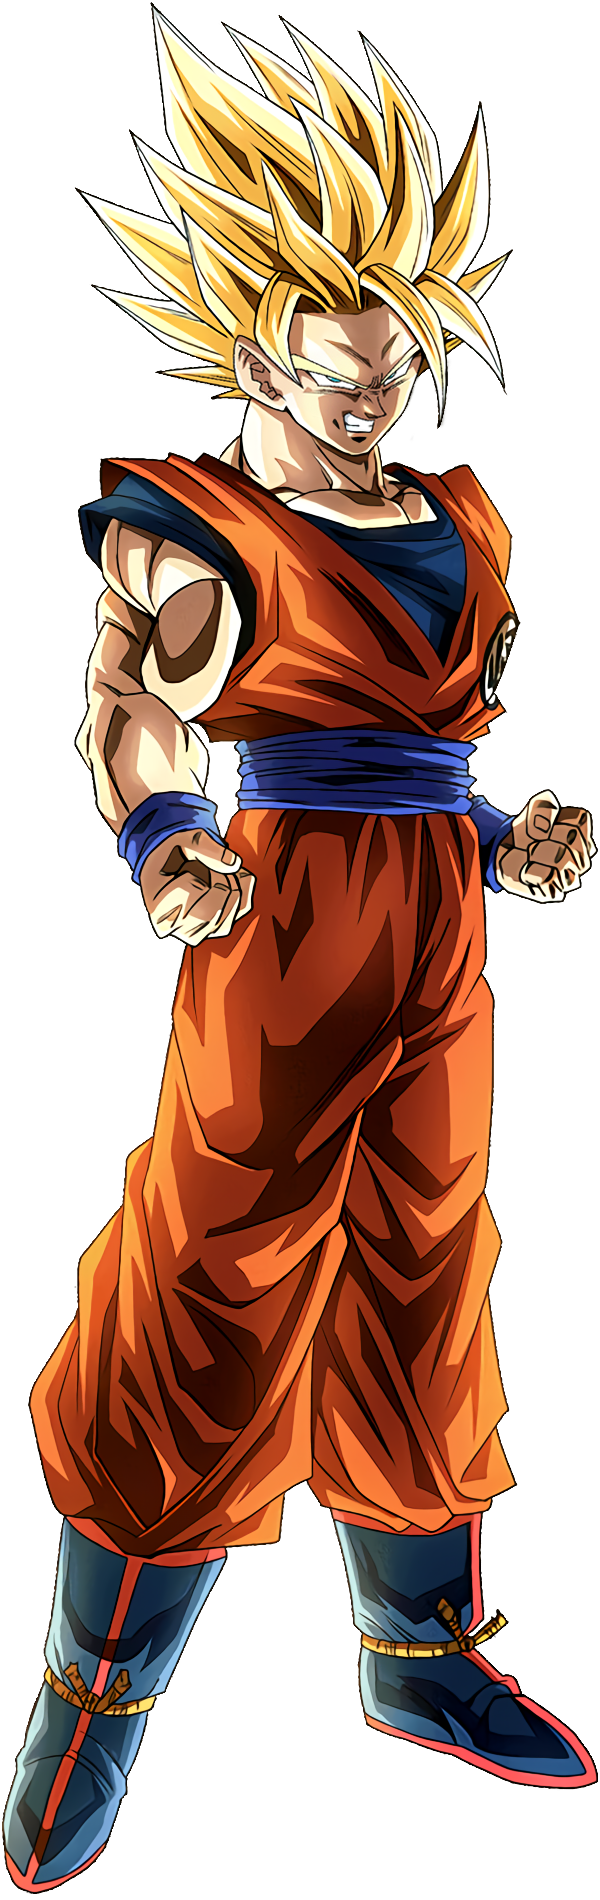 Super Saiyan 2 Goku (Upscale) by woodlandbuckle on DeviantArt